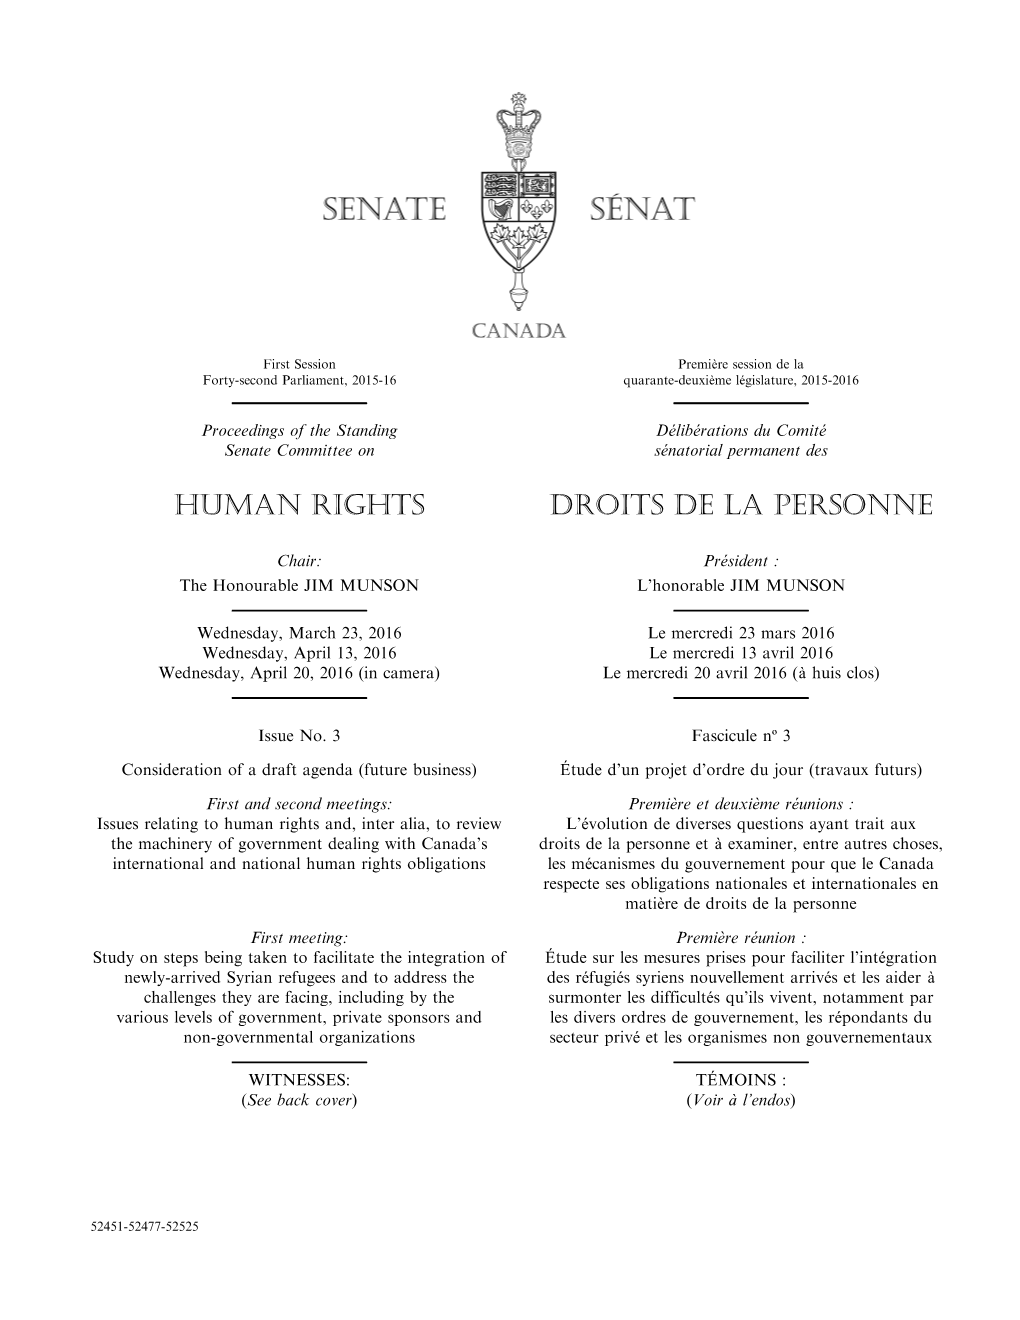 Human Rights Droits De La Personne